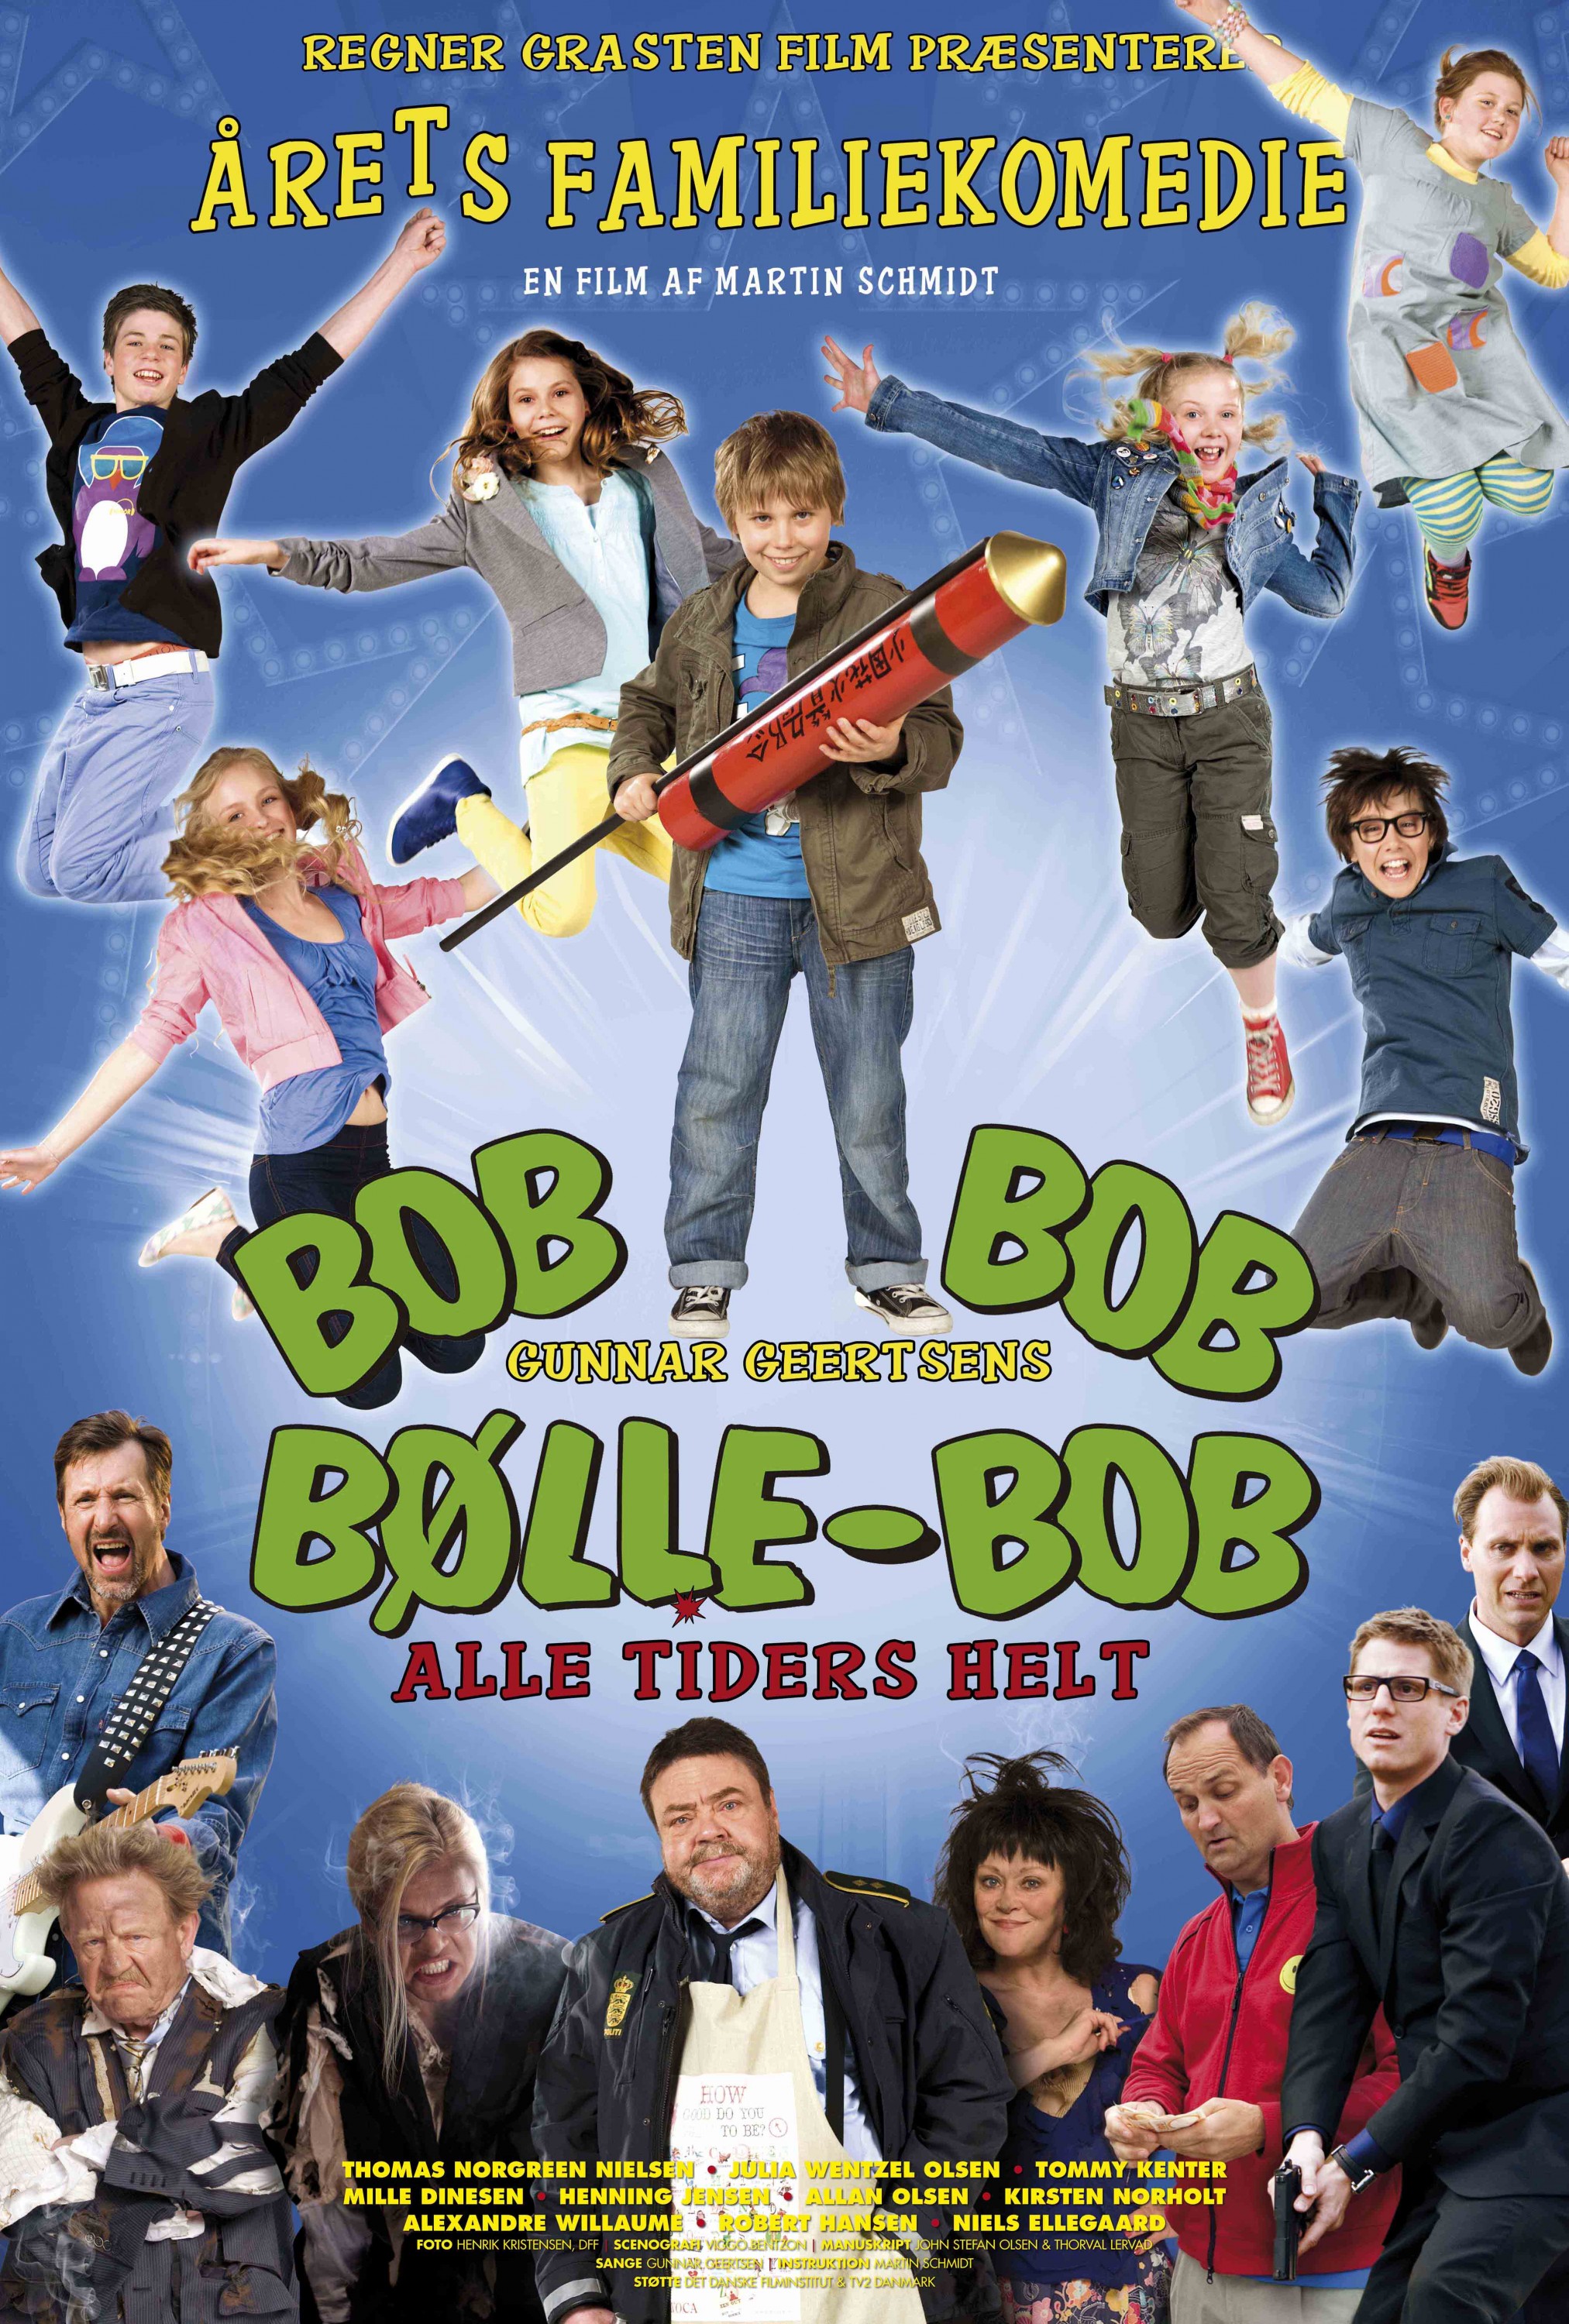 Mega Sized Movie Poster Image for Bølle Bob - Alle tiders helt 